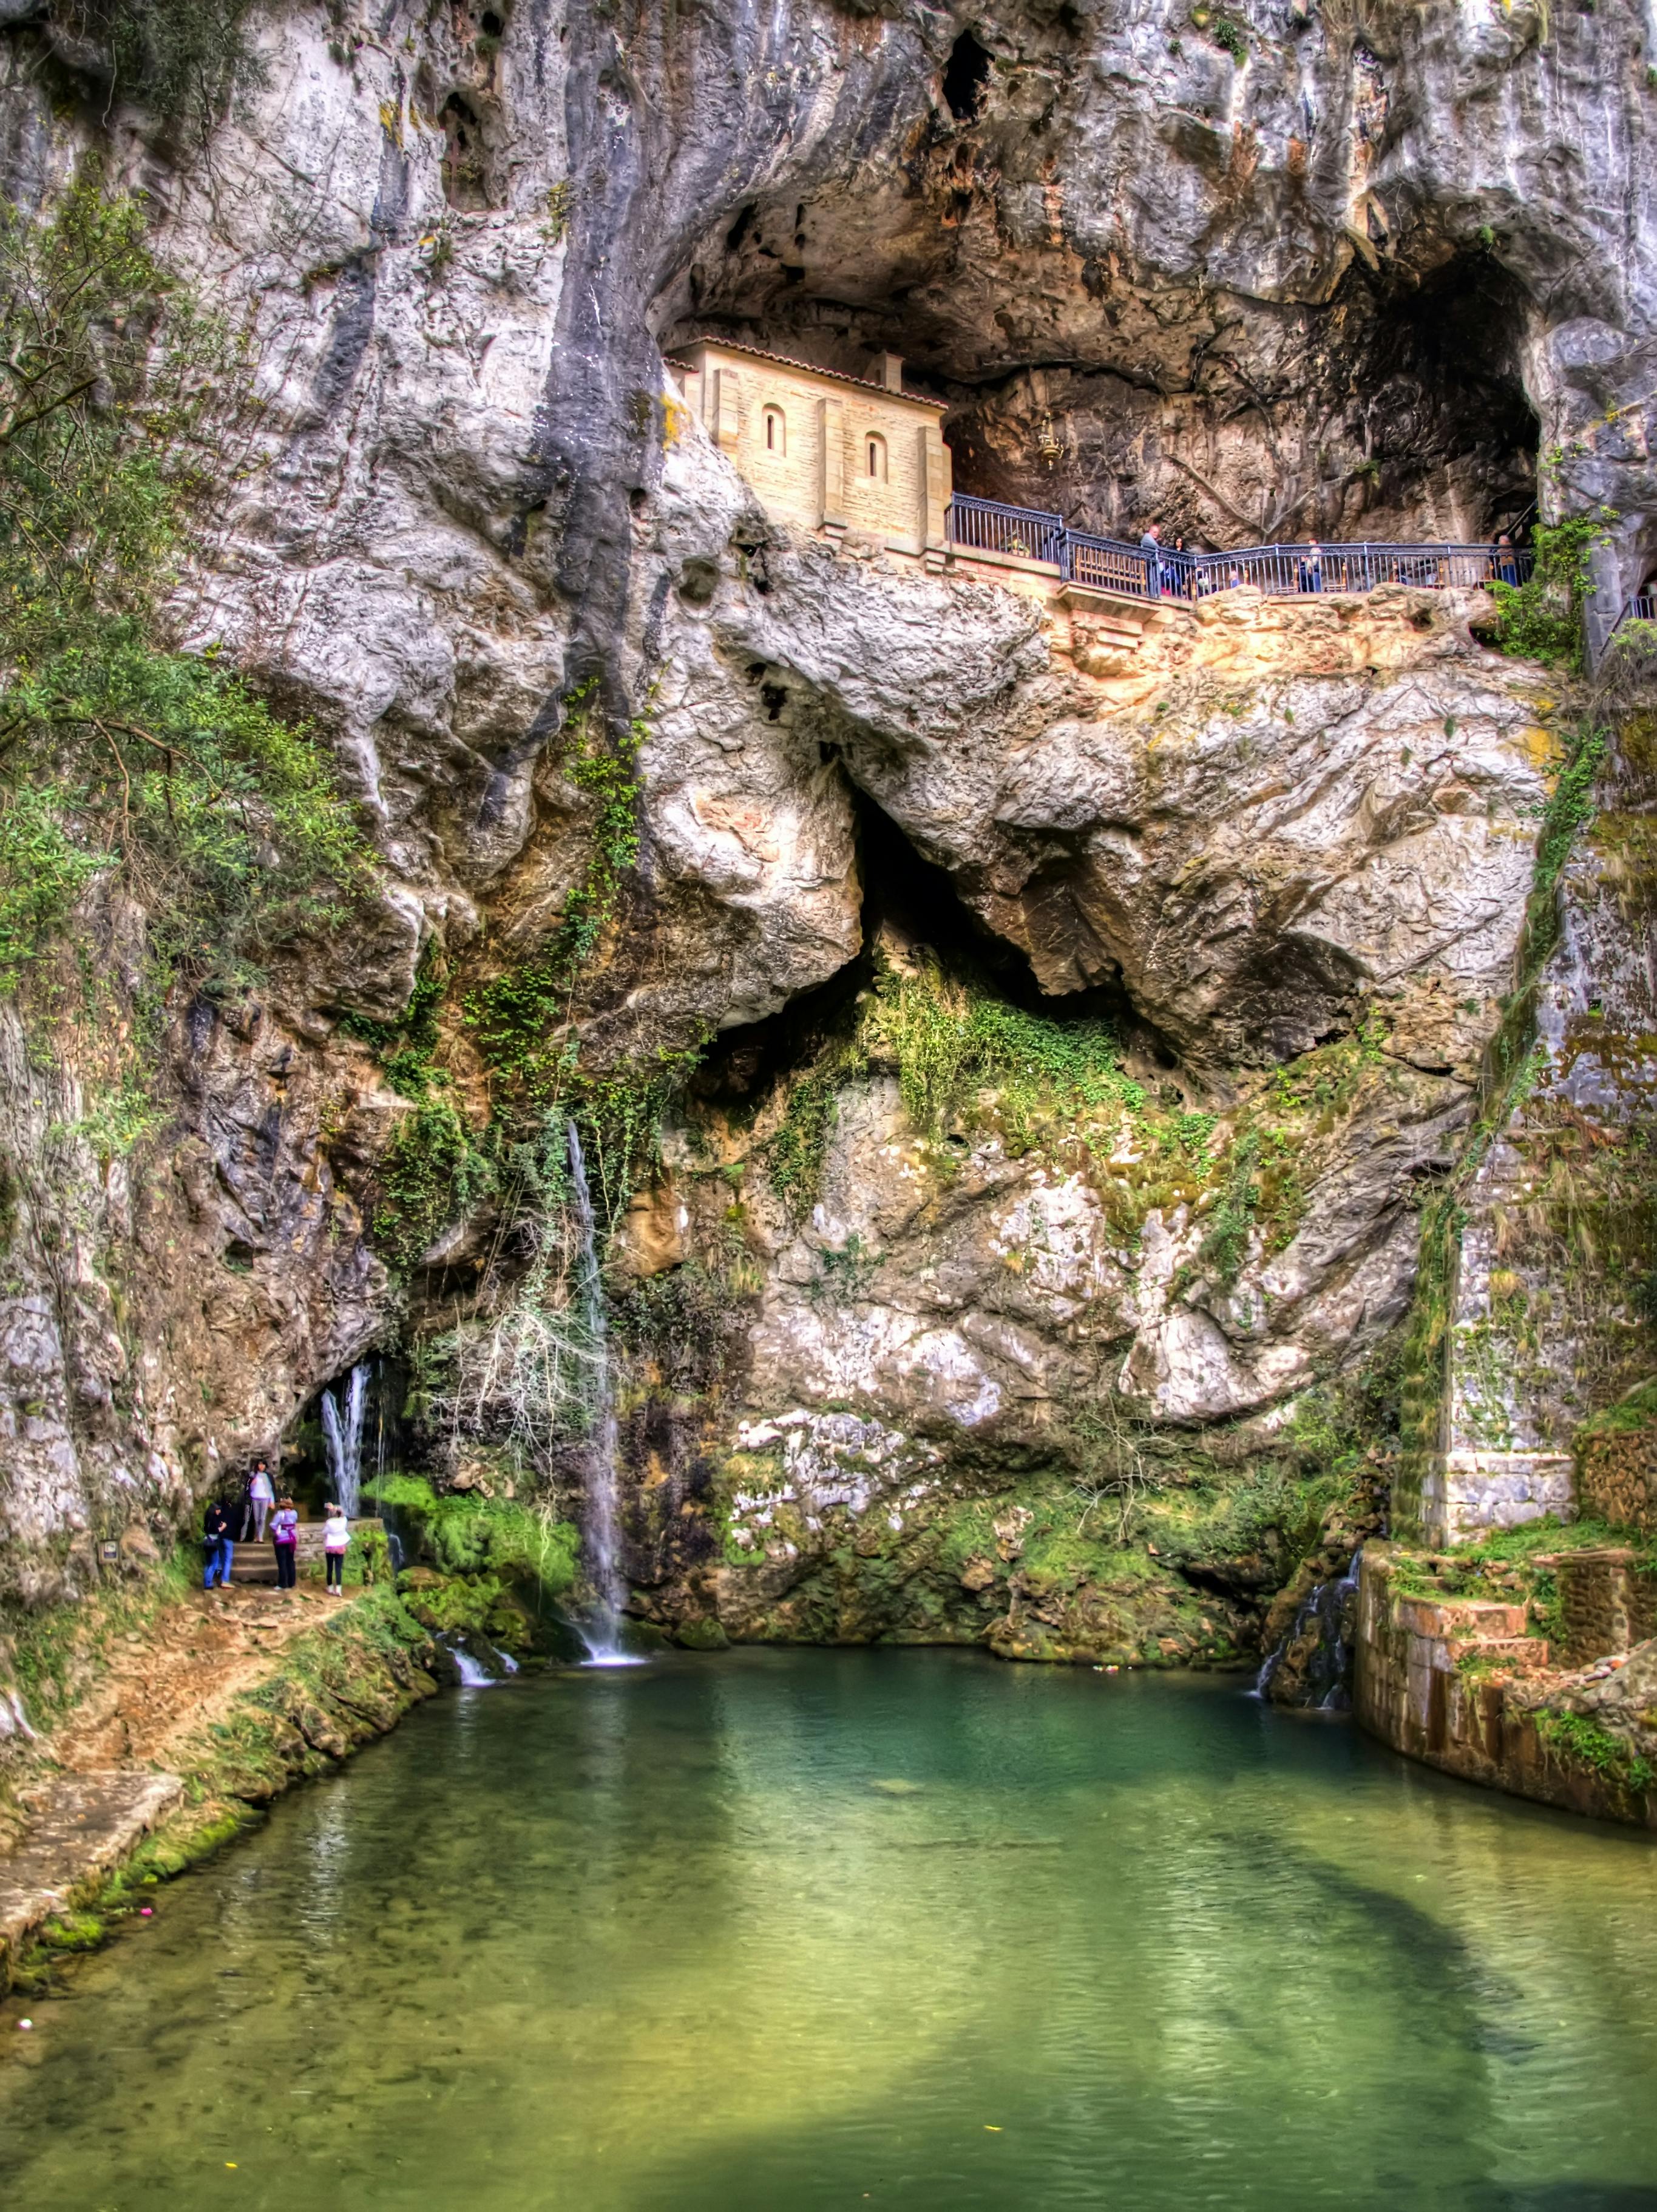 Santa Cueva de Covadonga - Picos De Europa National Park	

